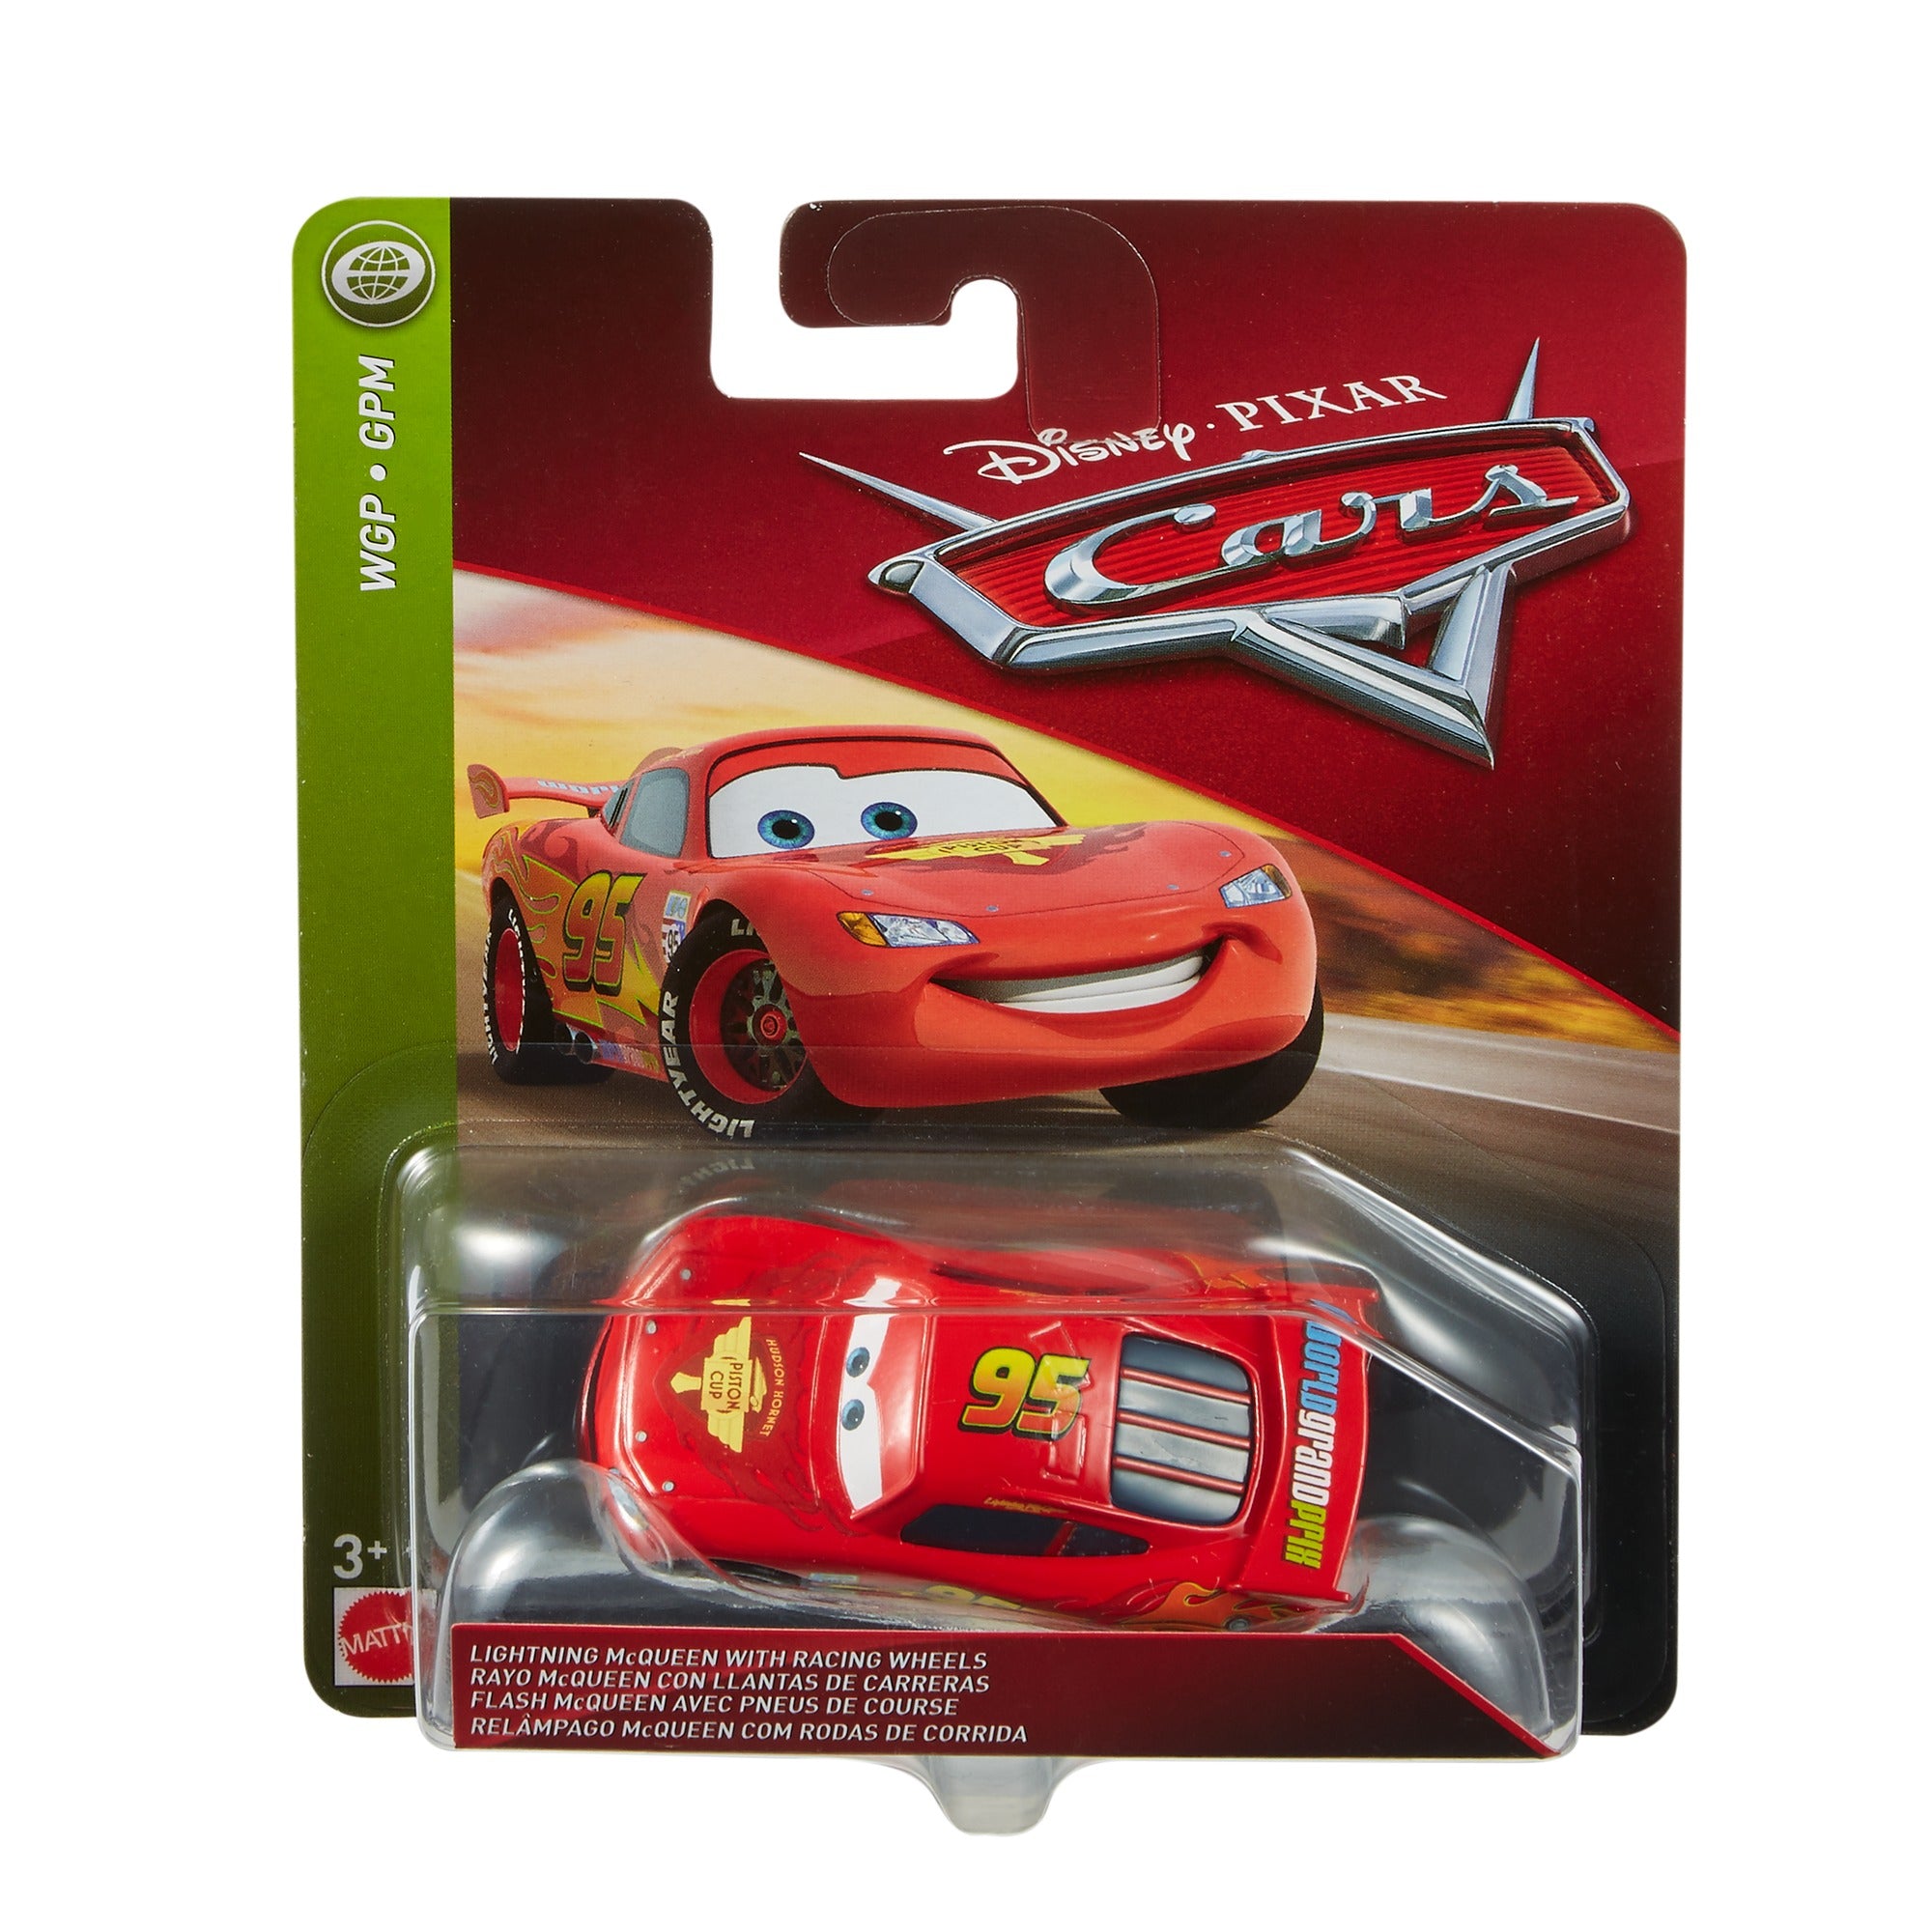 Disney Pixar Cars Lightning McQueen with Racing Wheels – Square